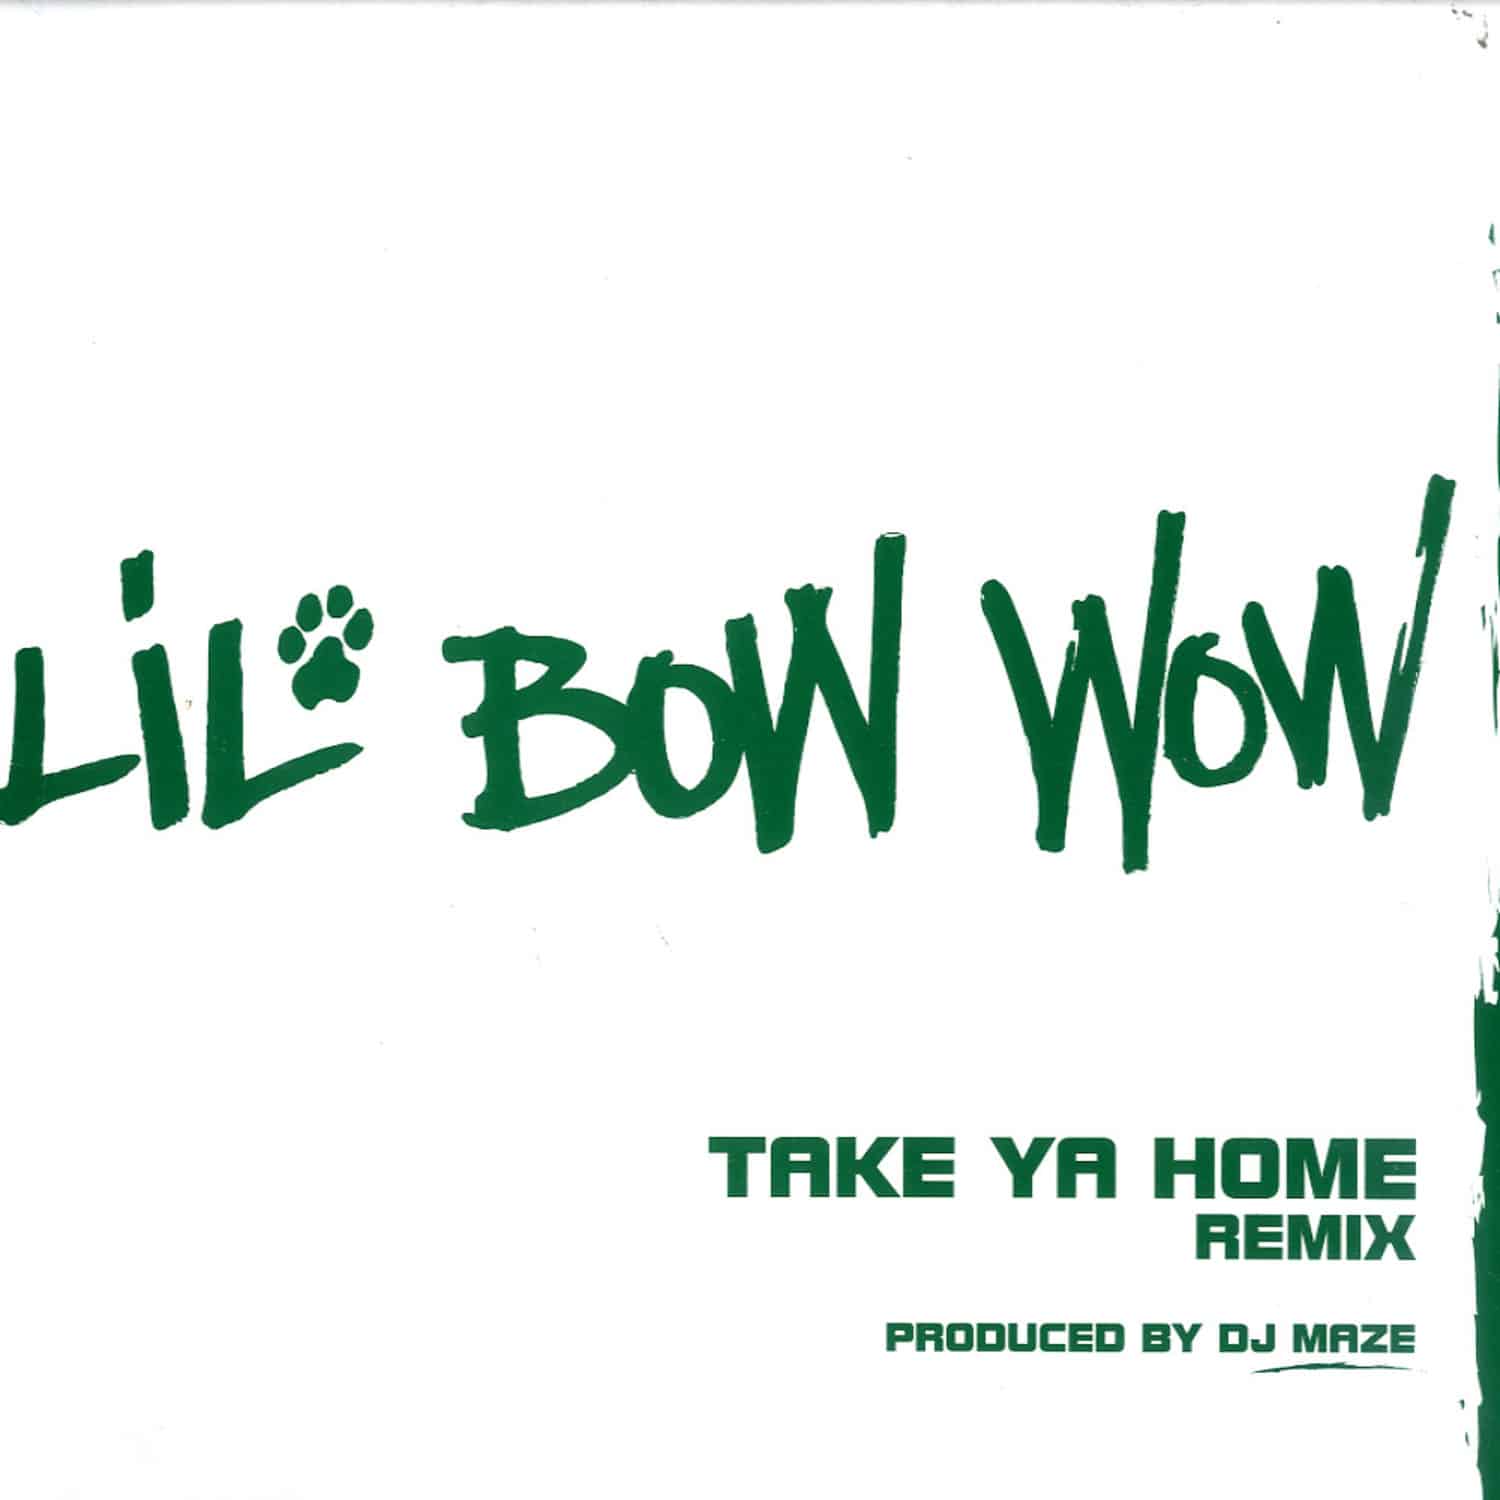 Lil Bow Wow - TAKE YA HOME